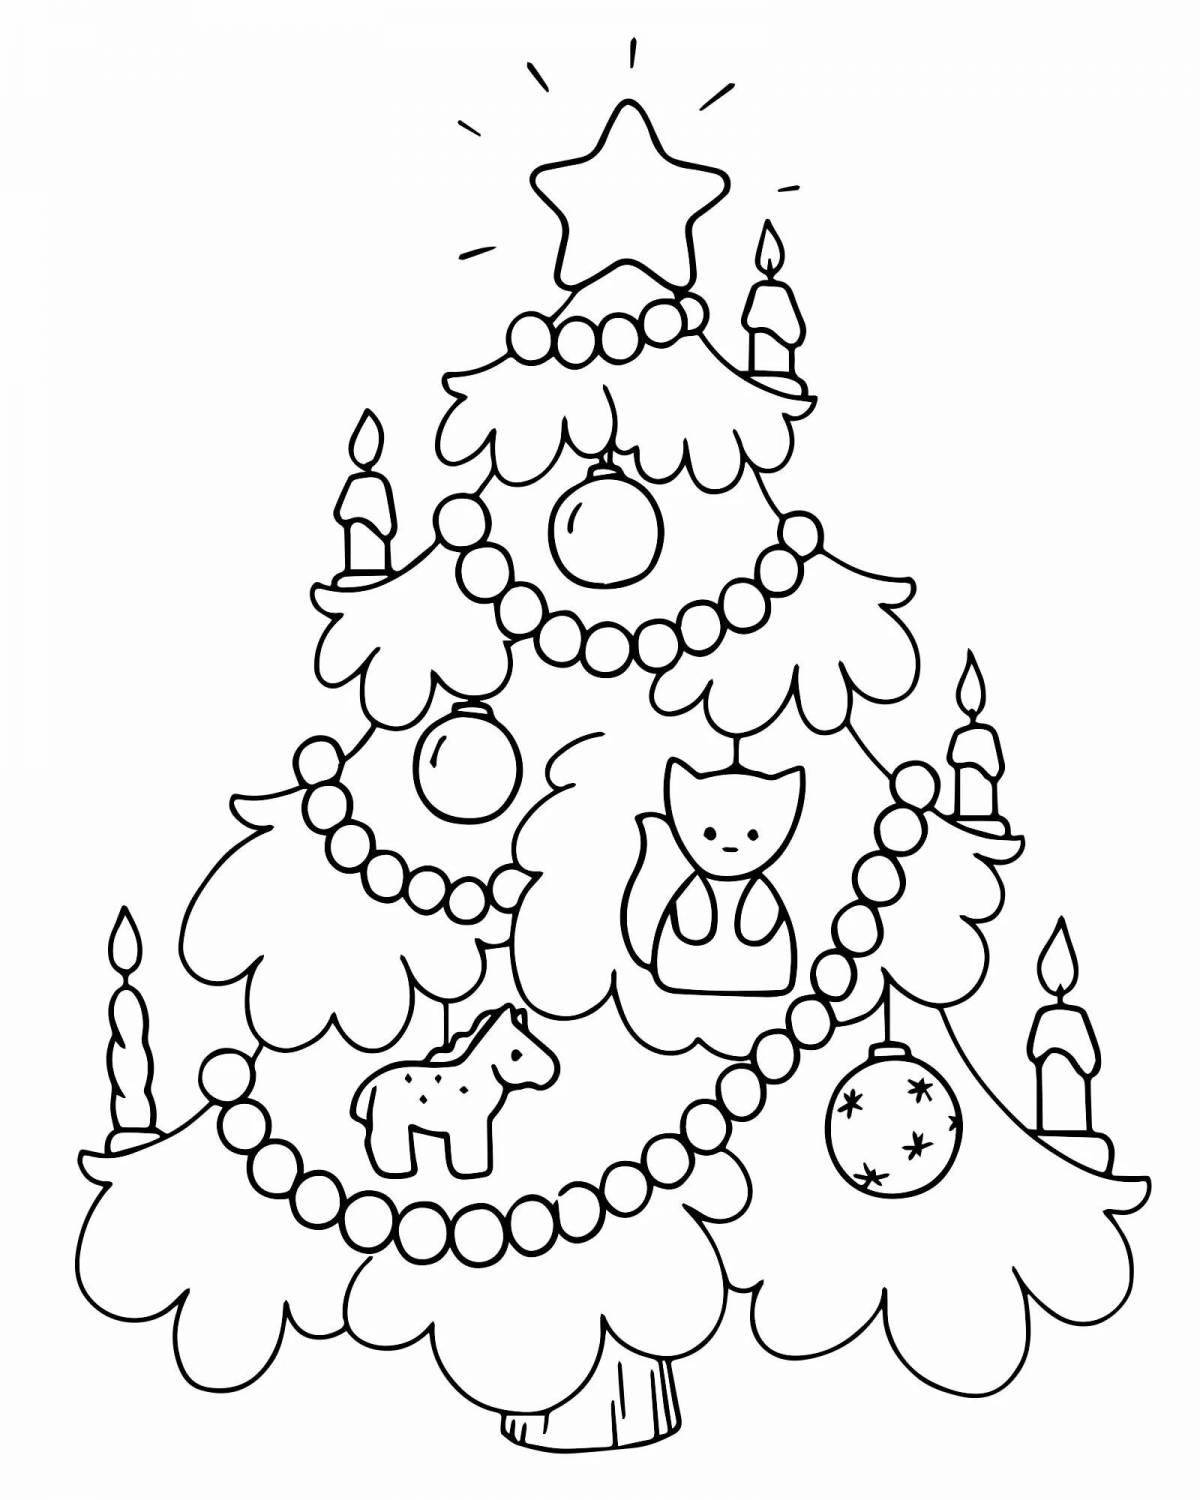 Christmas holiday drawing for kids